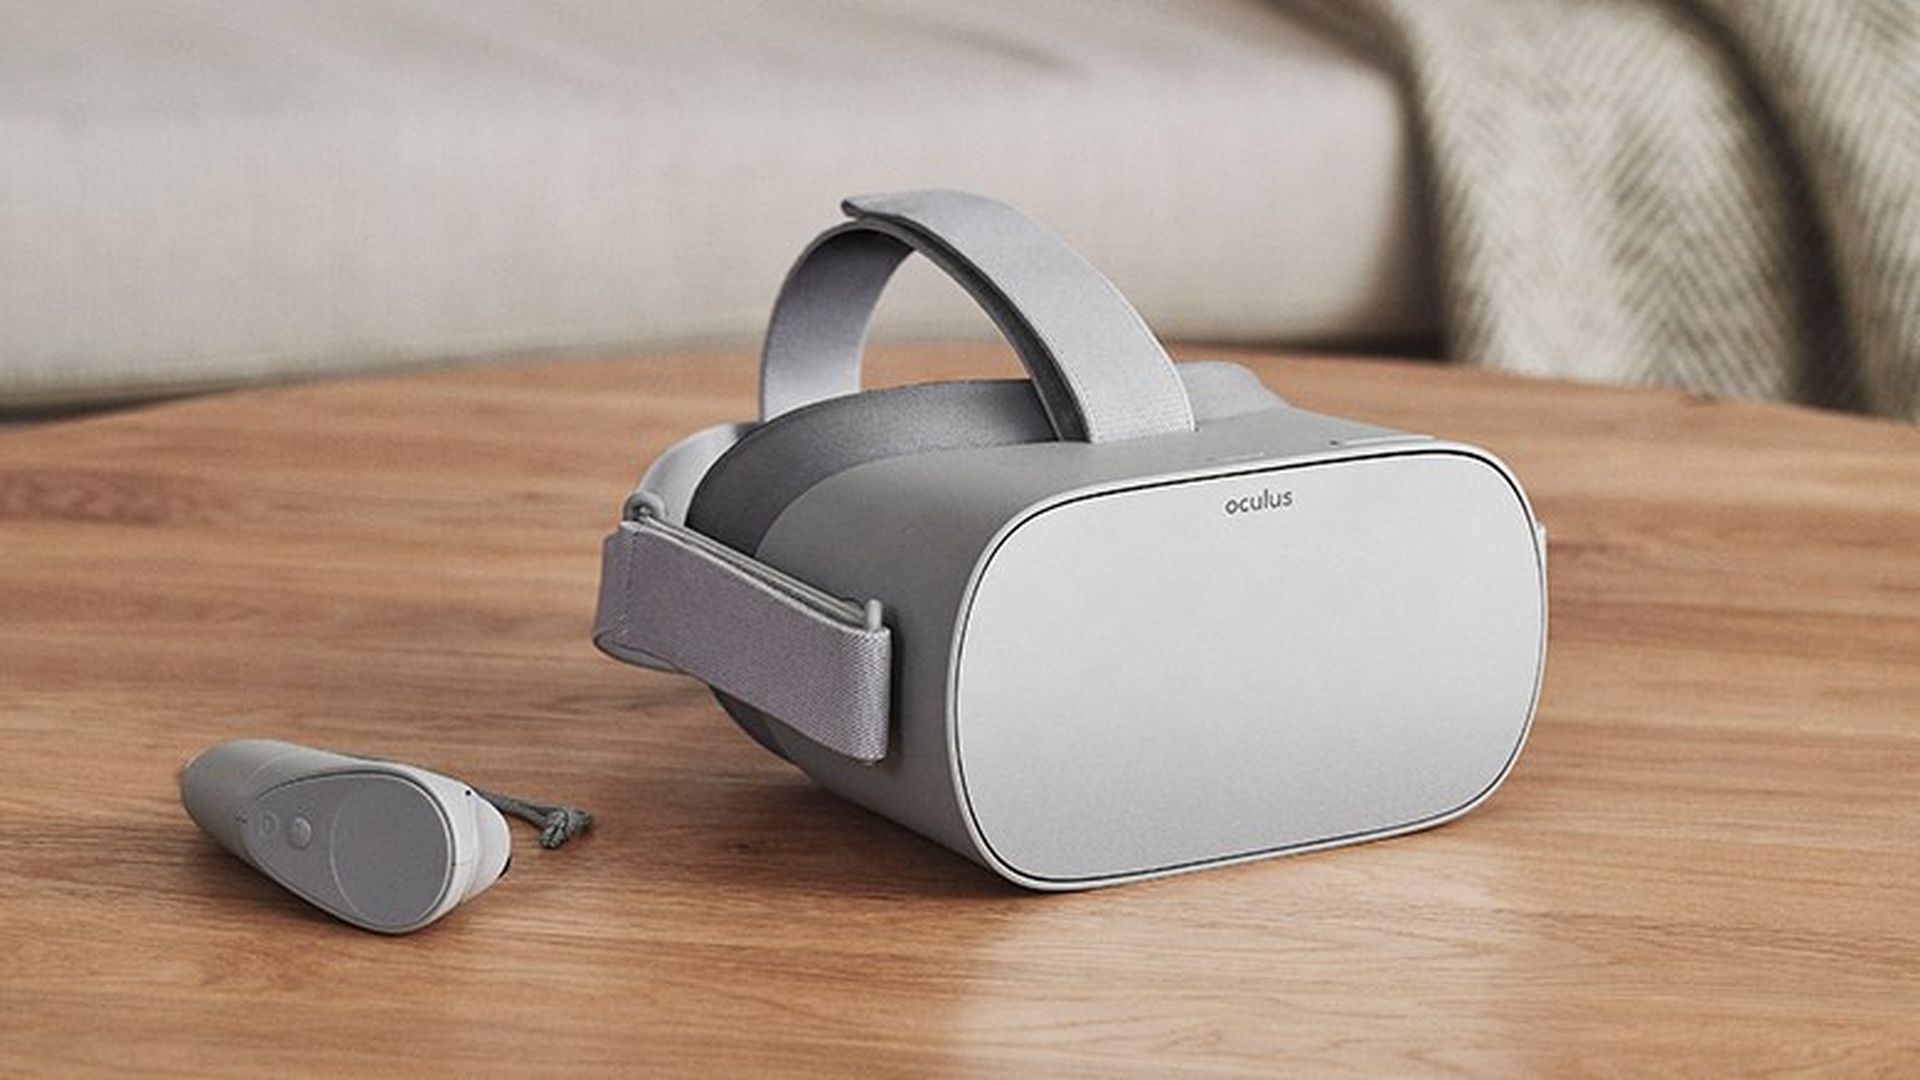 gap punishment Remain Facebook unveils "portable" Oculus VR headset